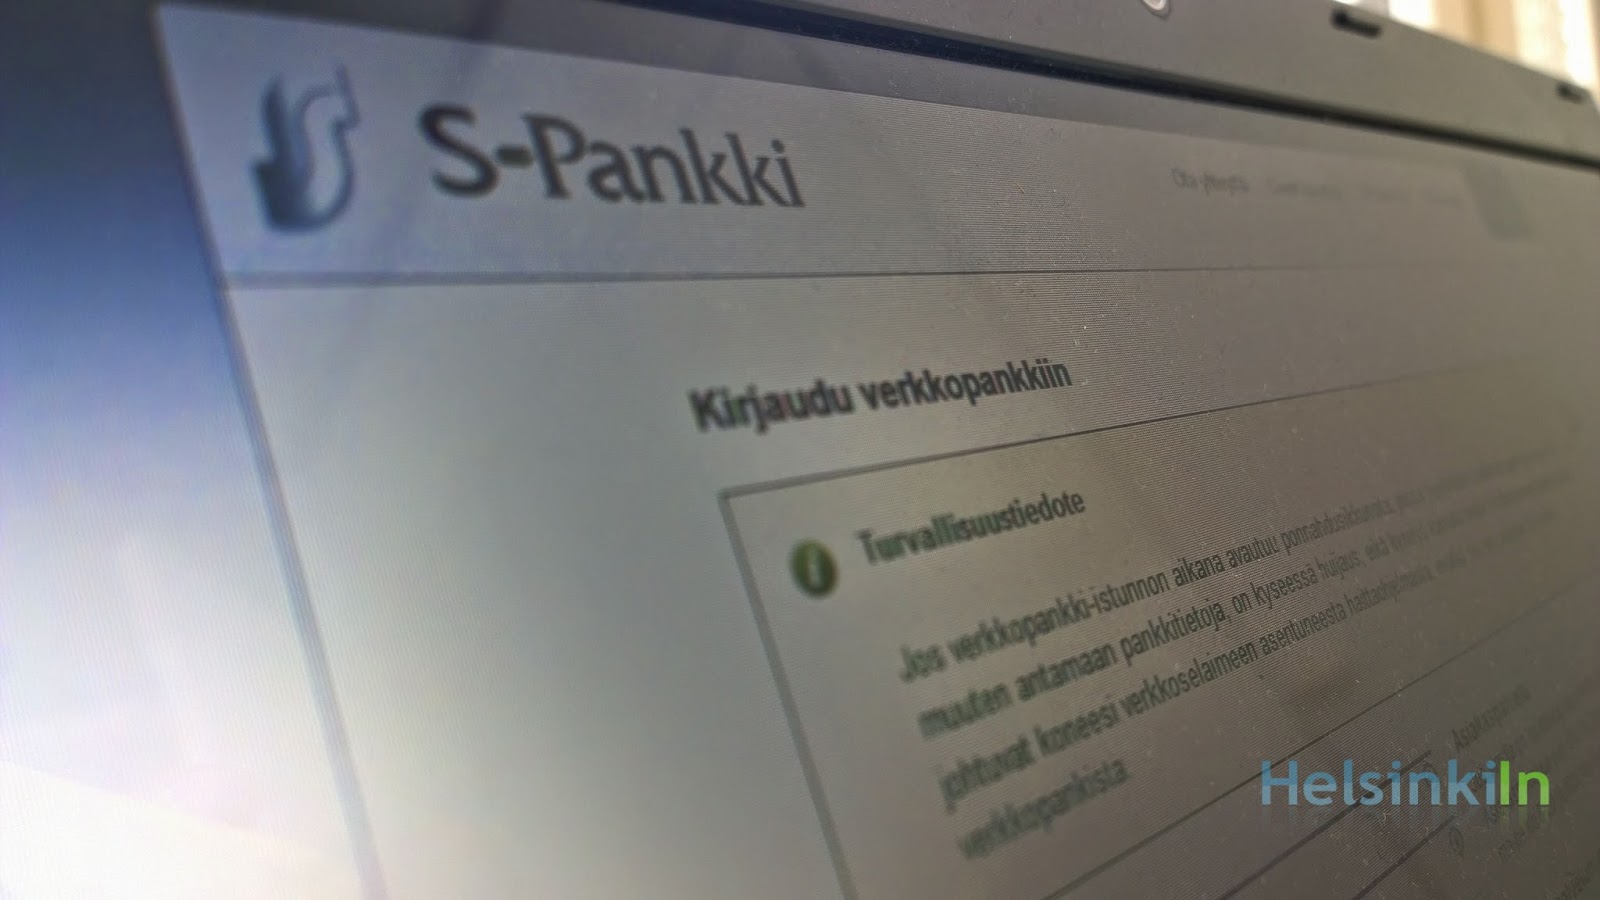 S-Pankki Online Banking